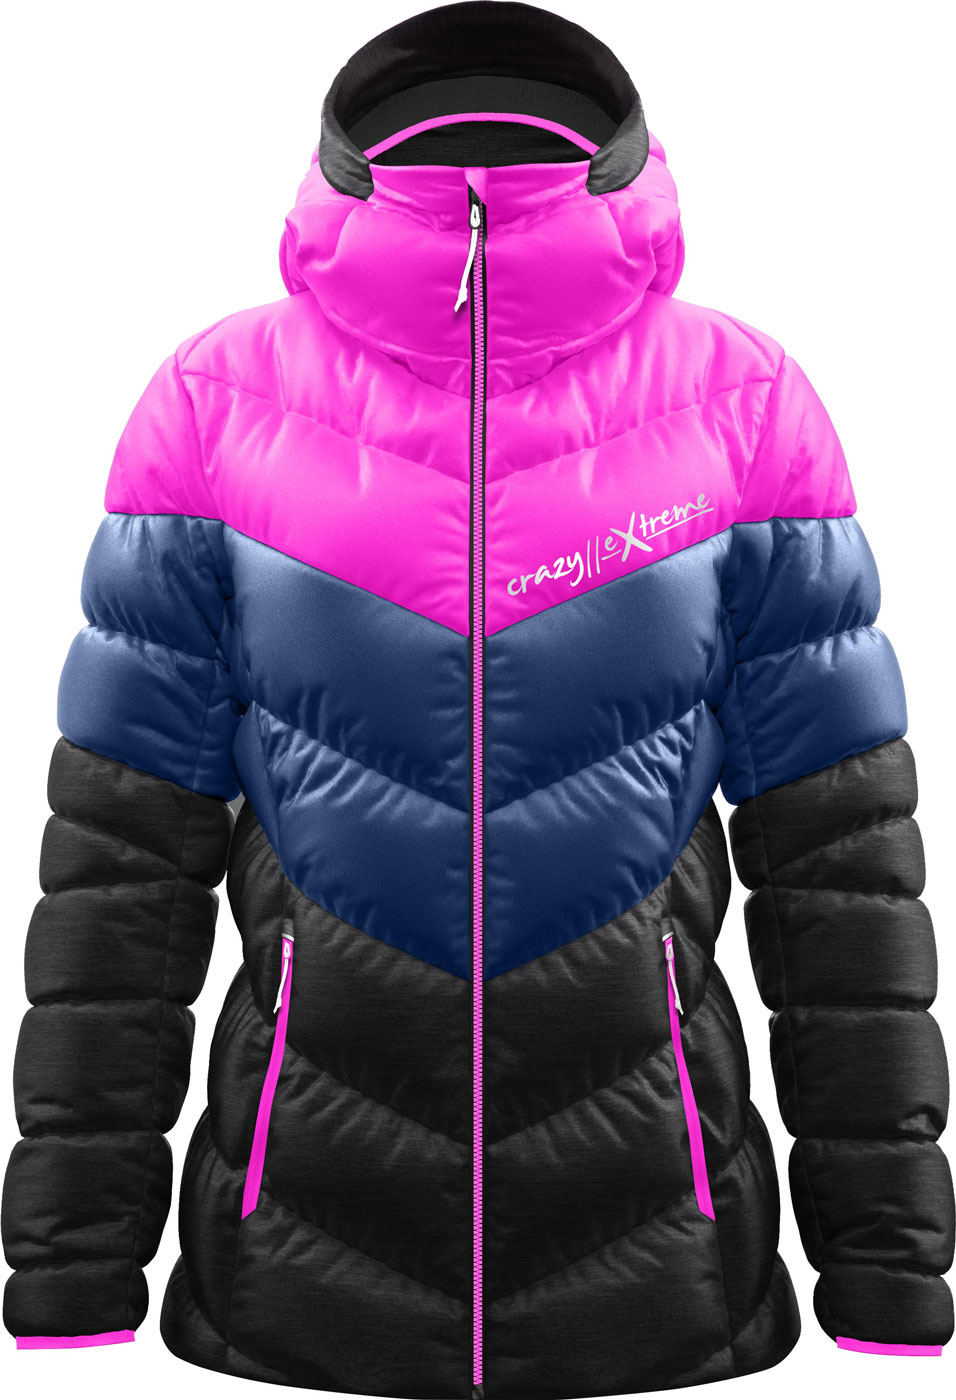 Idea at buy Jackets - Women Gardena online Crazy - Jkt Everest Sport